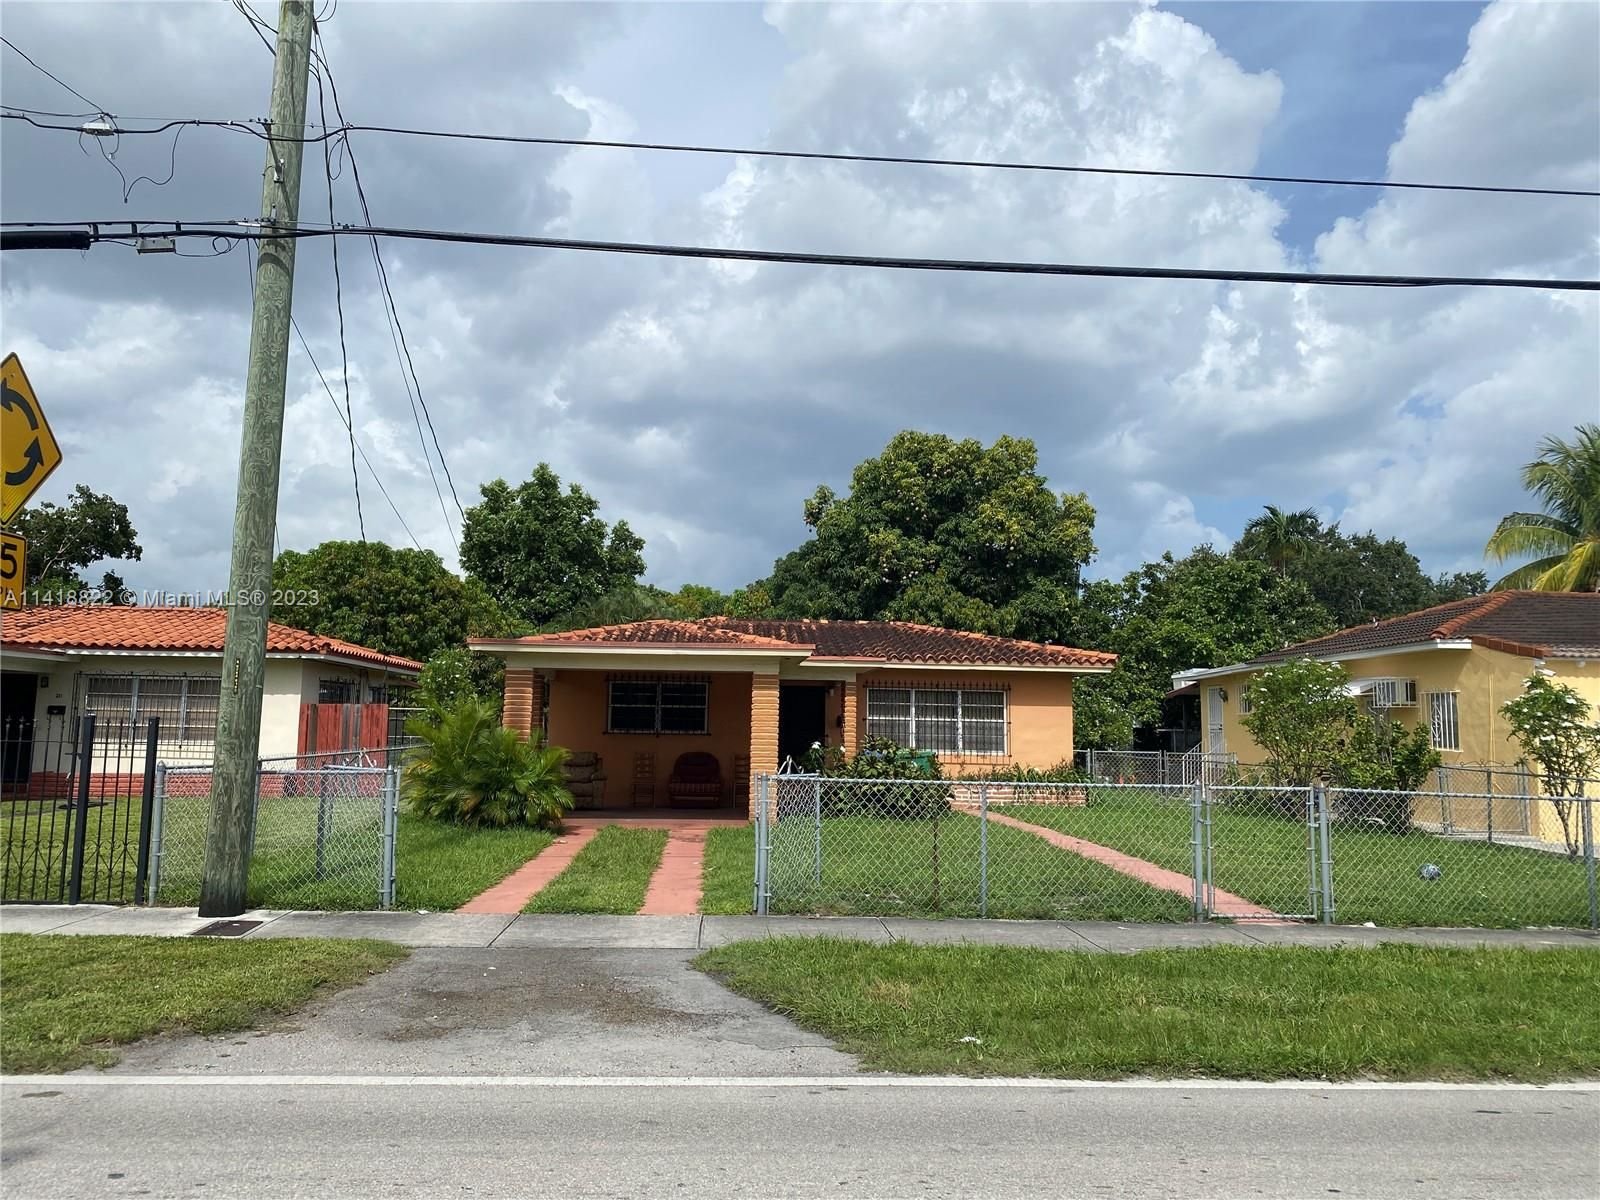 Real estate property located at 215 47th Ave, Miami-Dade County, Miami, FL